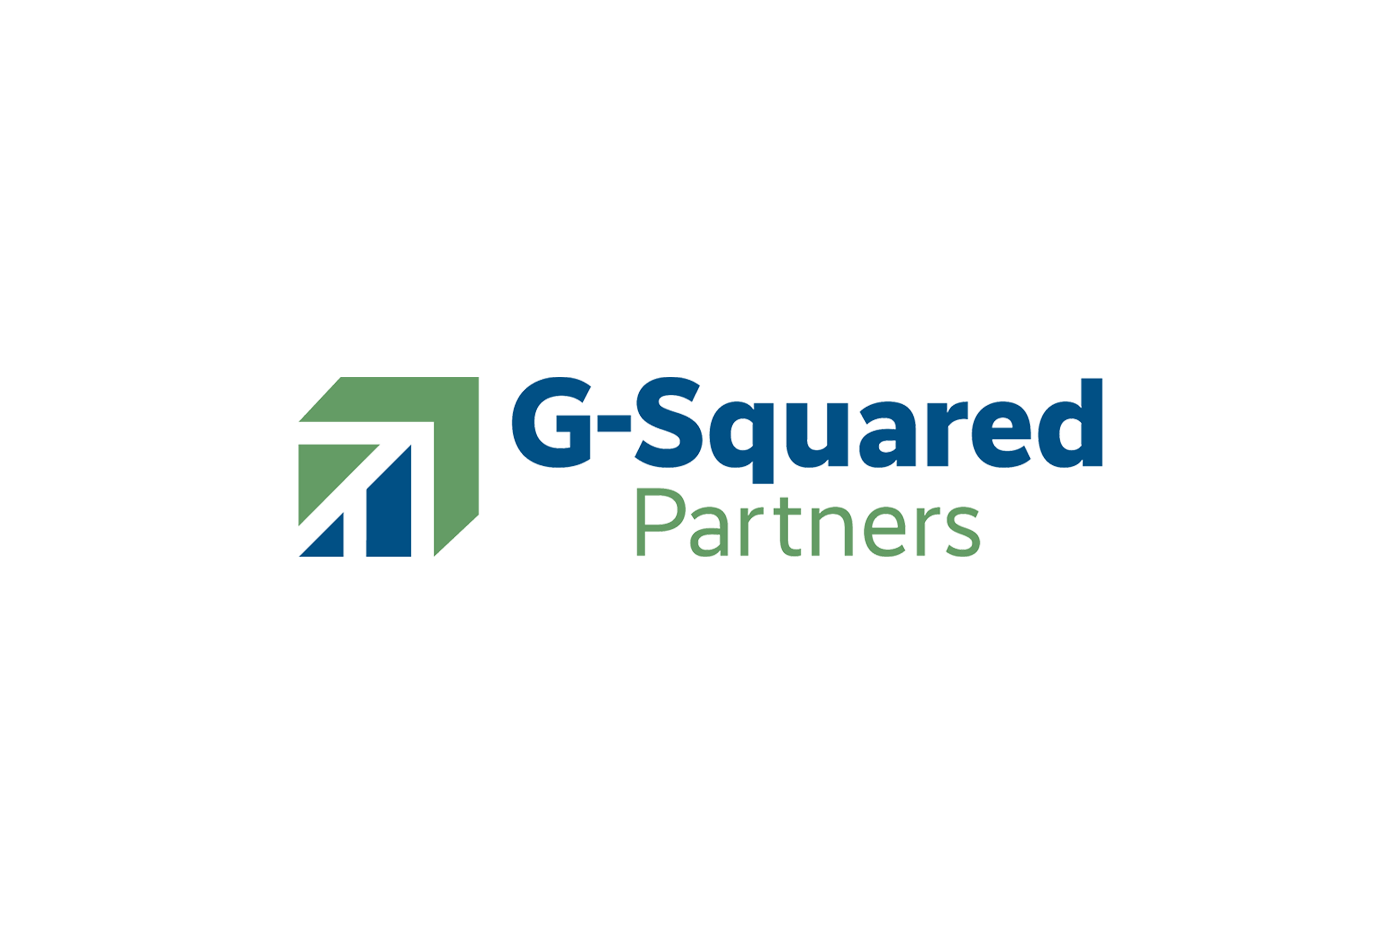 Gsquared logo